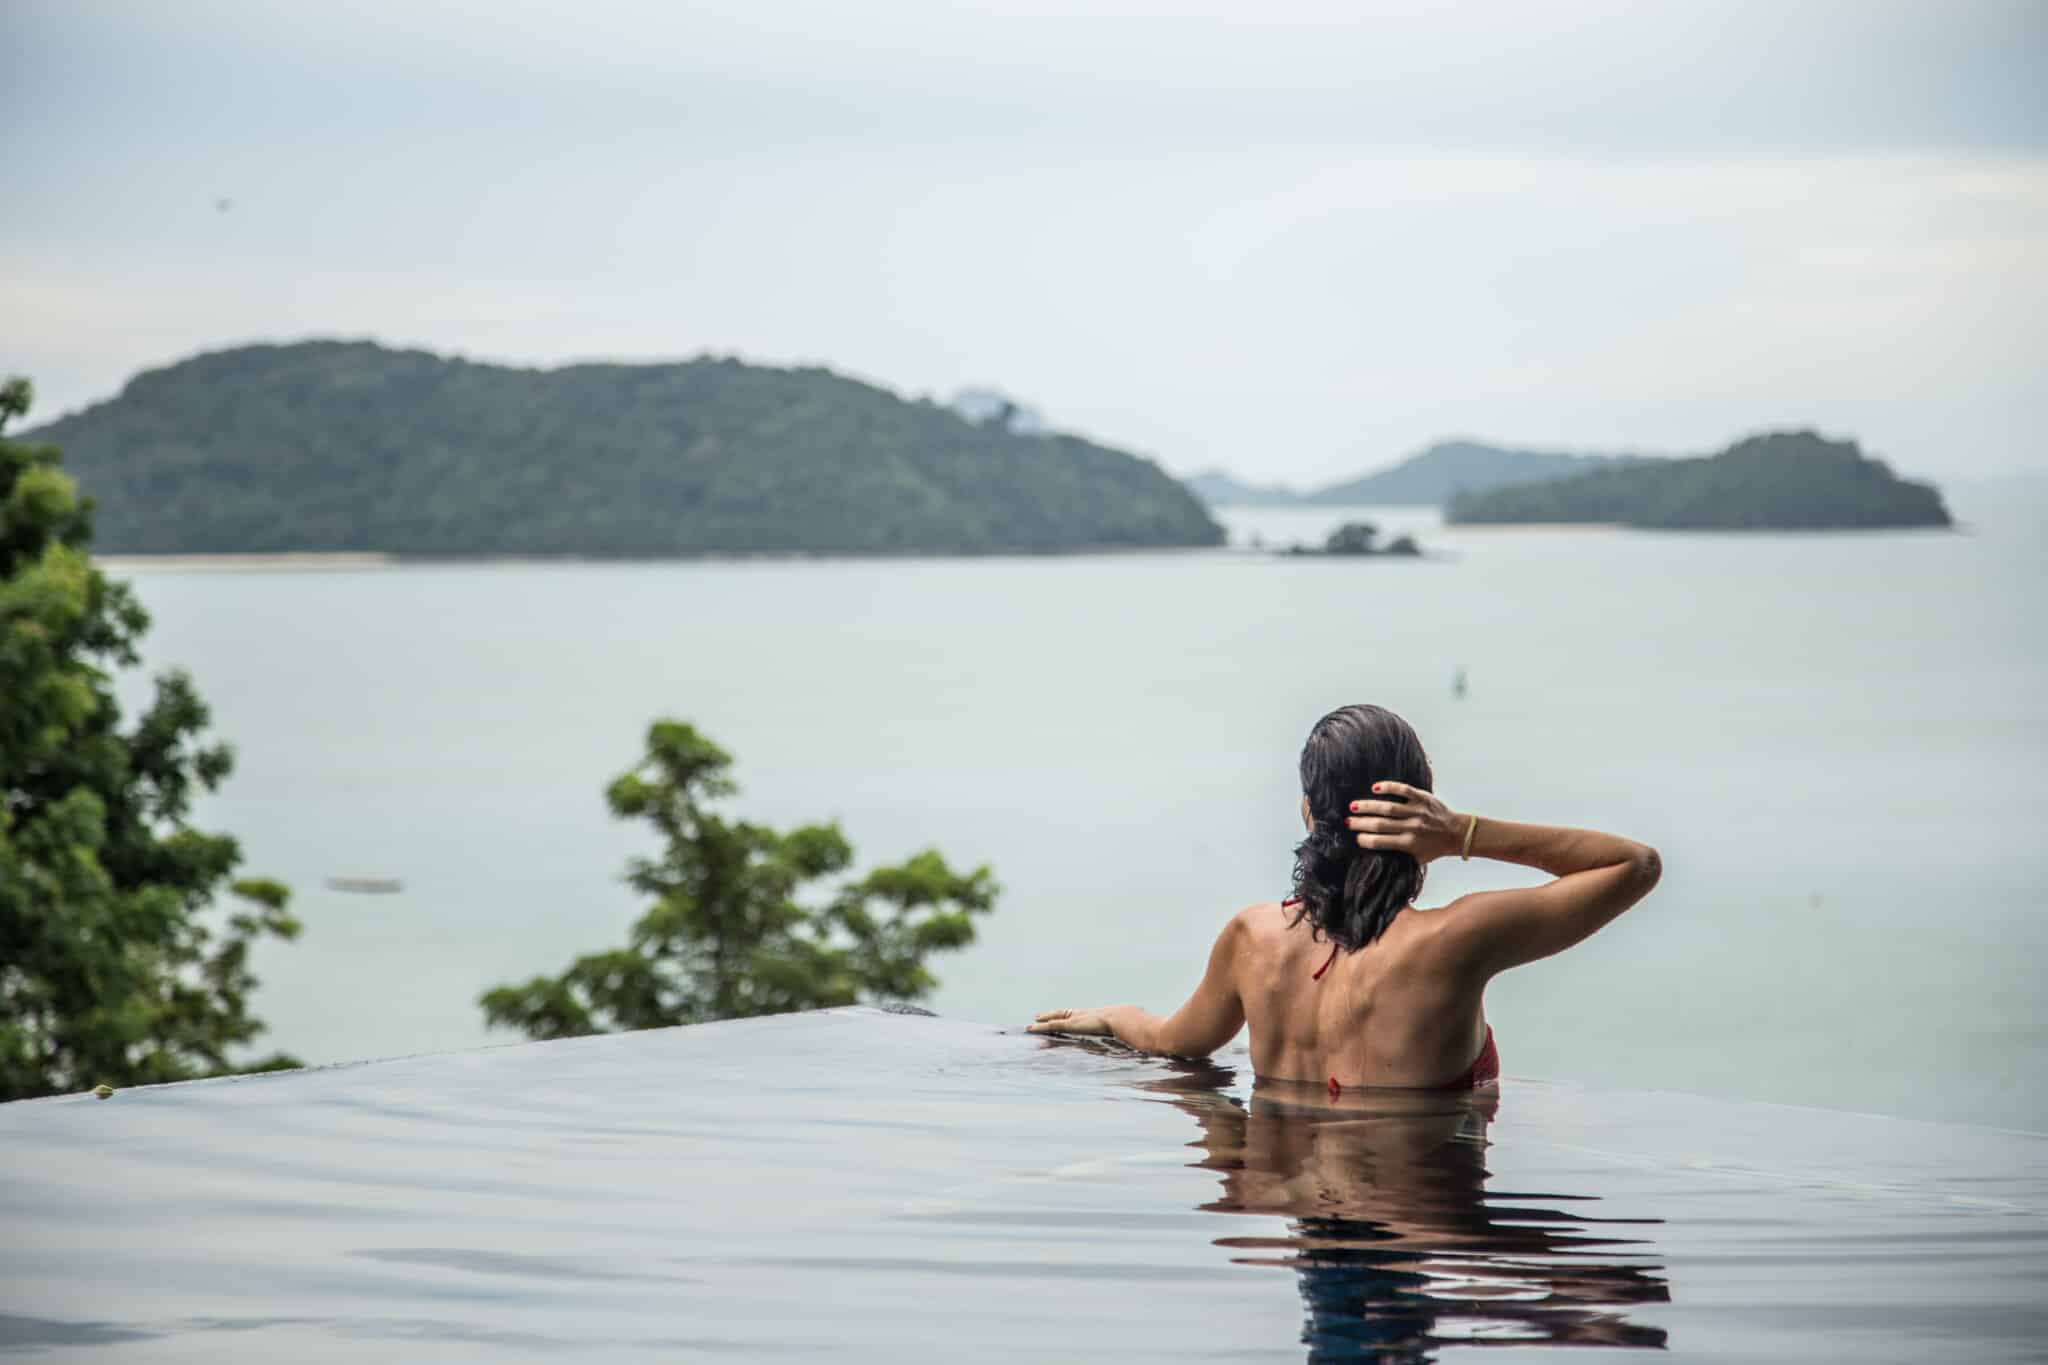 Aida Pool Phuket by Kristen Kellogg @saltandwind